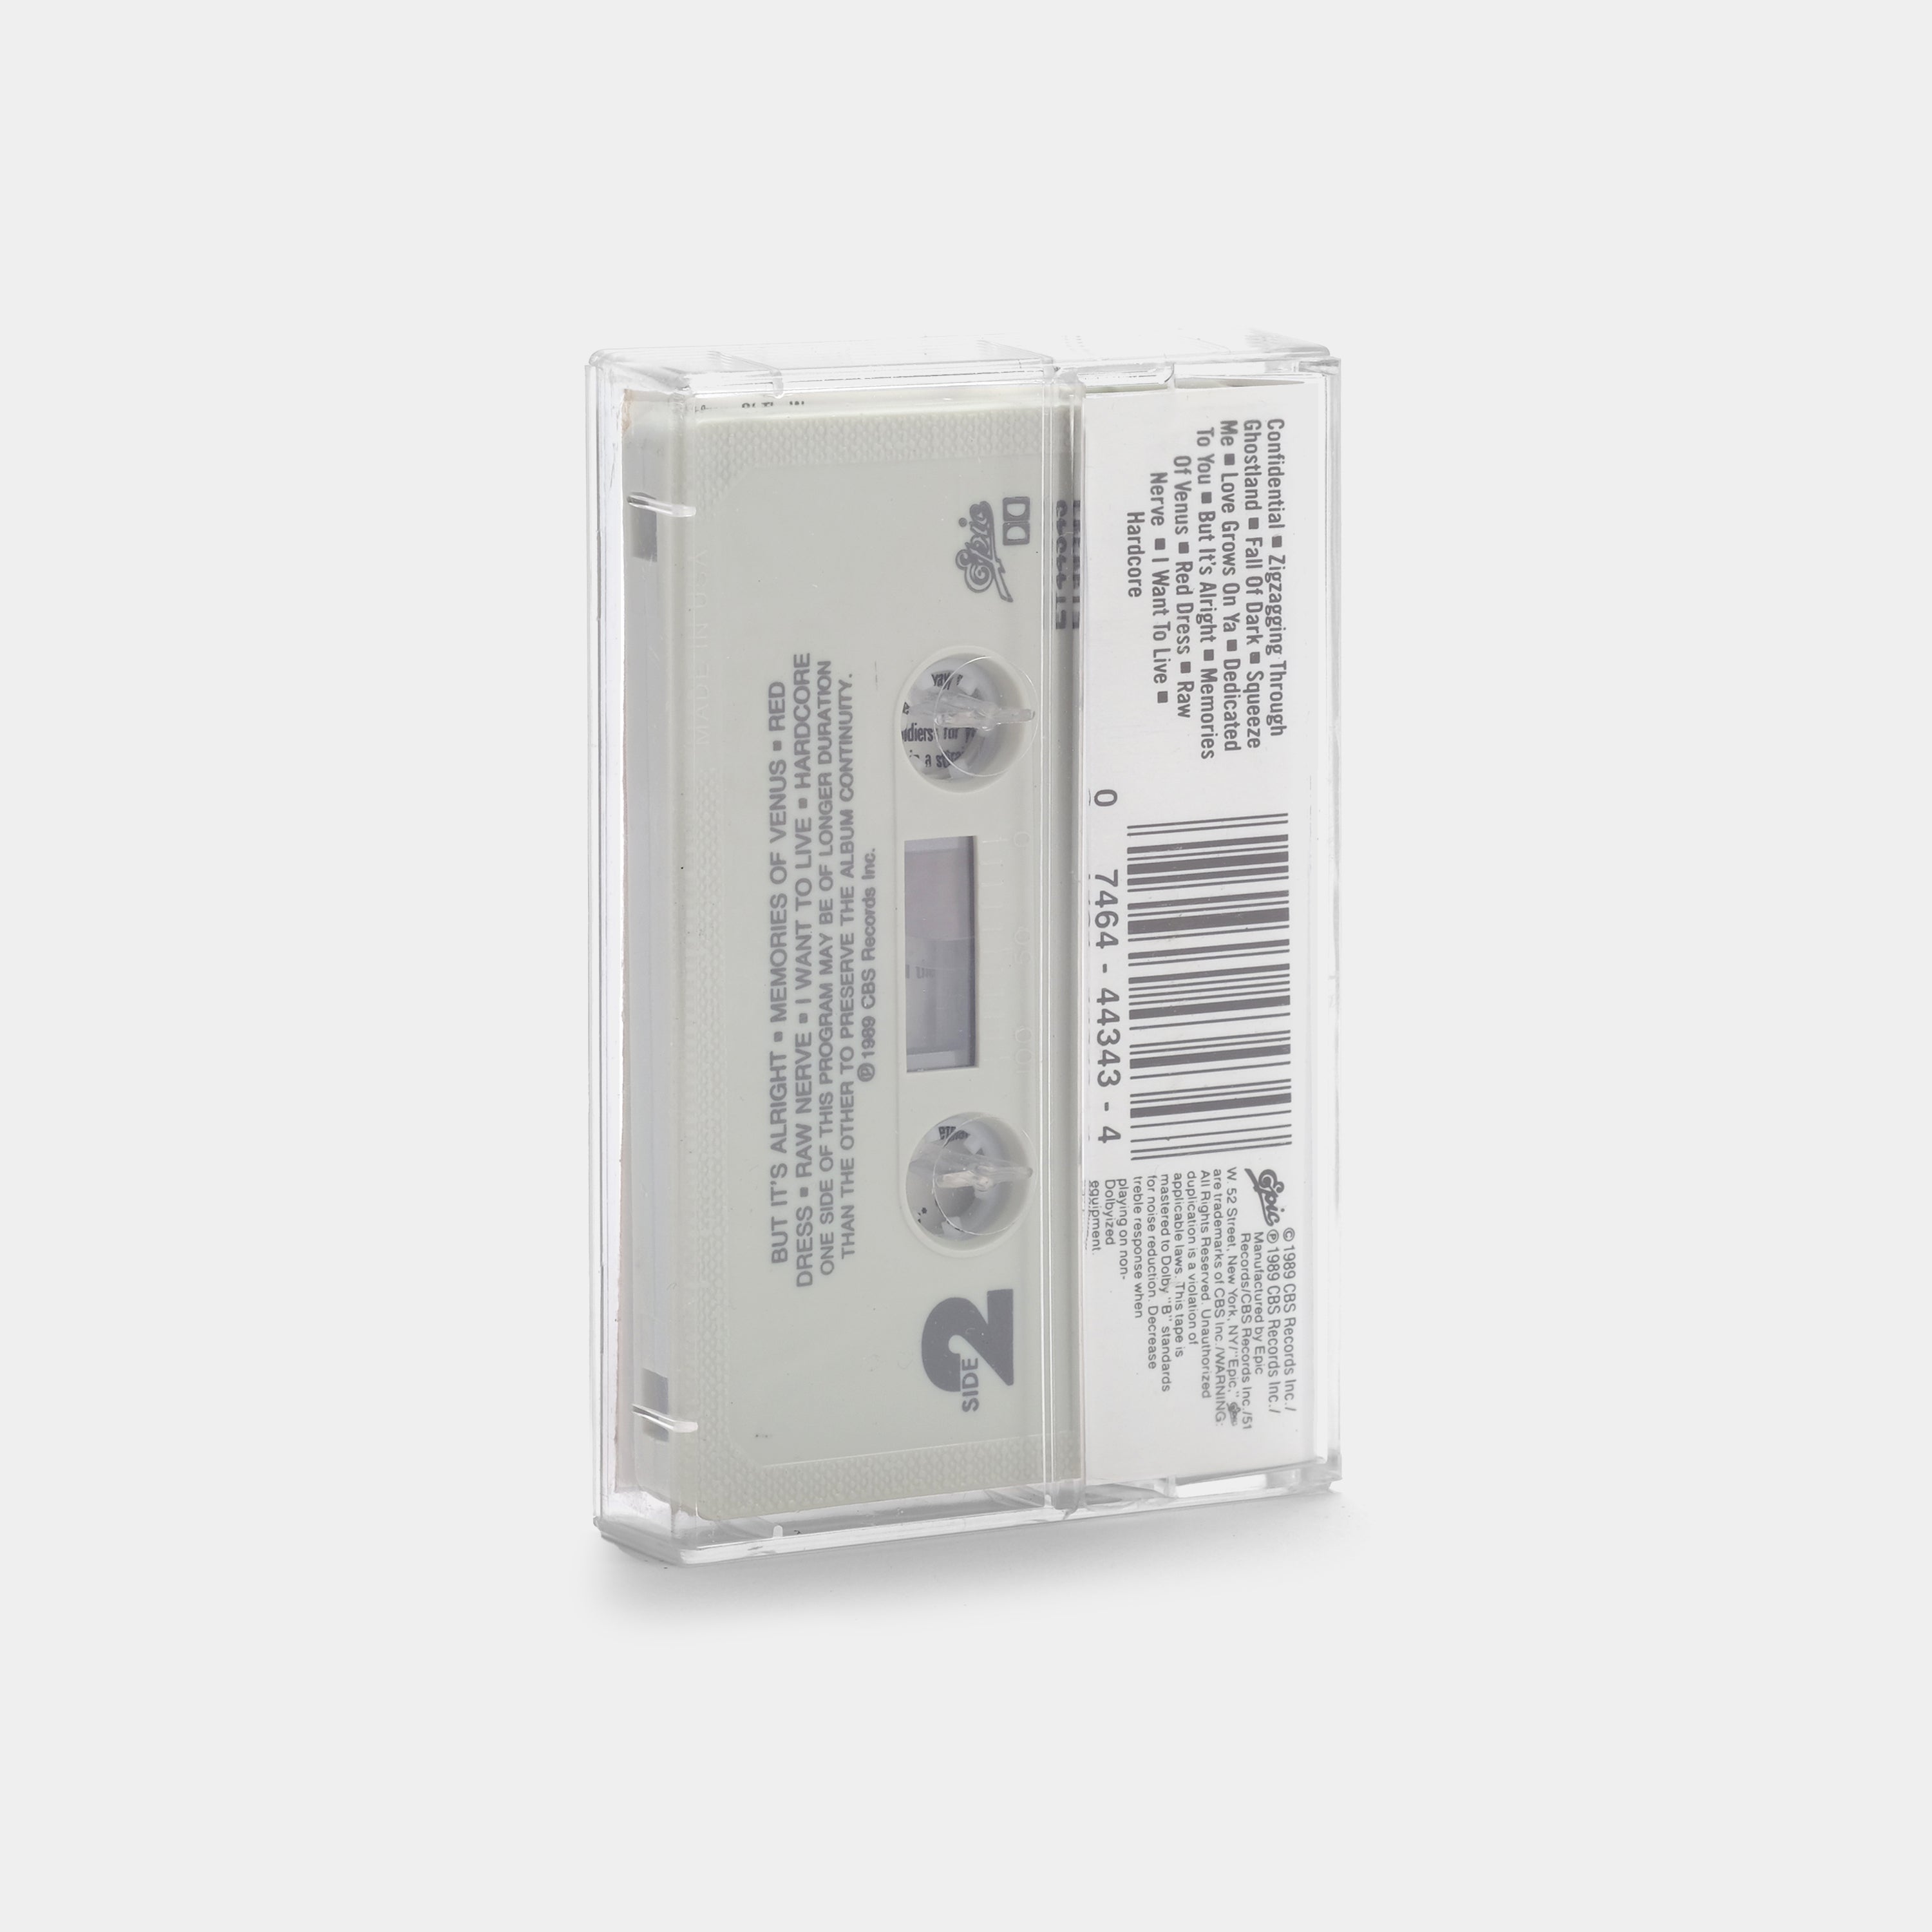 The New Orleans Radiators - Zig-Zaggin' Through Ghostland Cassette Tape